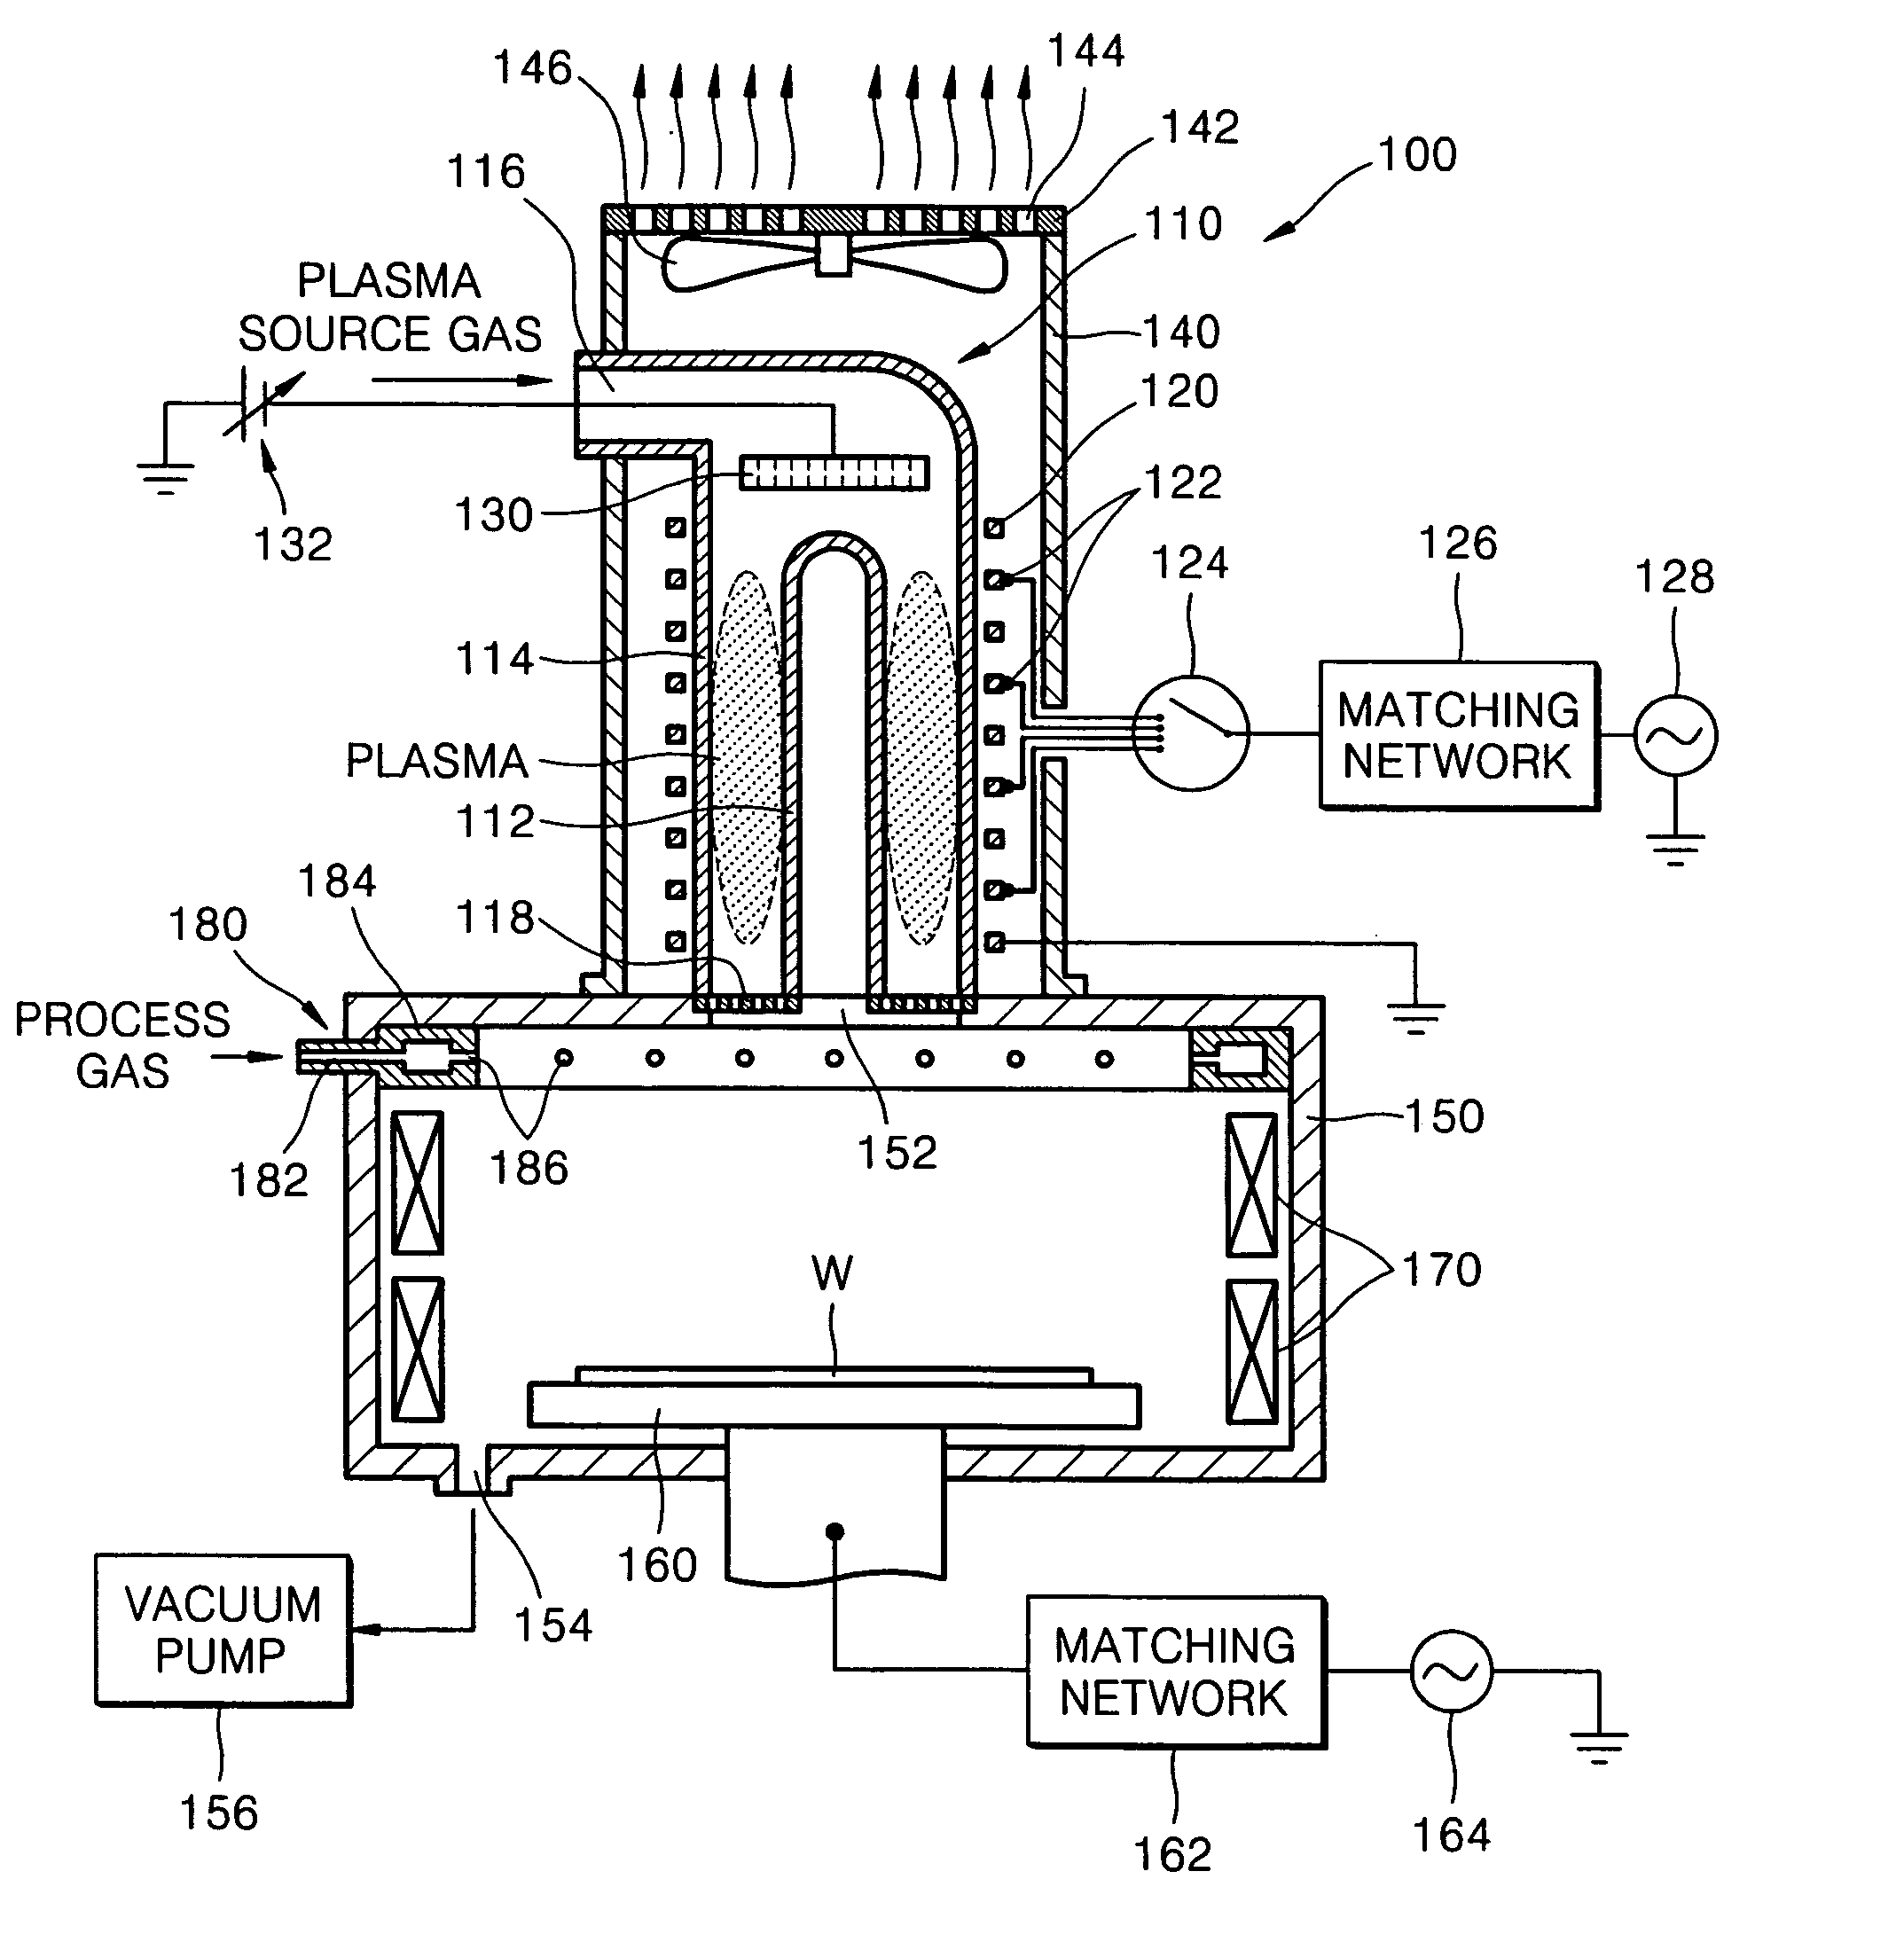 Helical resonator type plasma processing apparatus